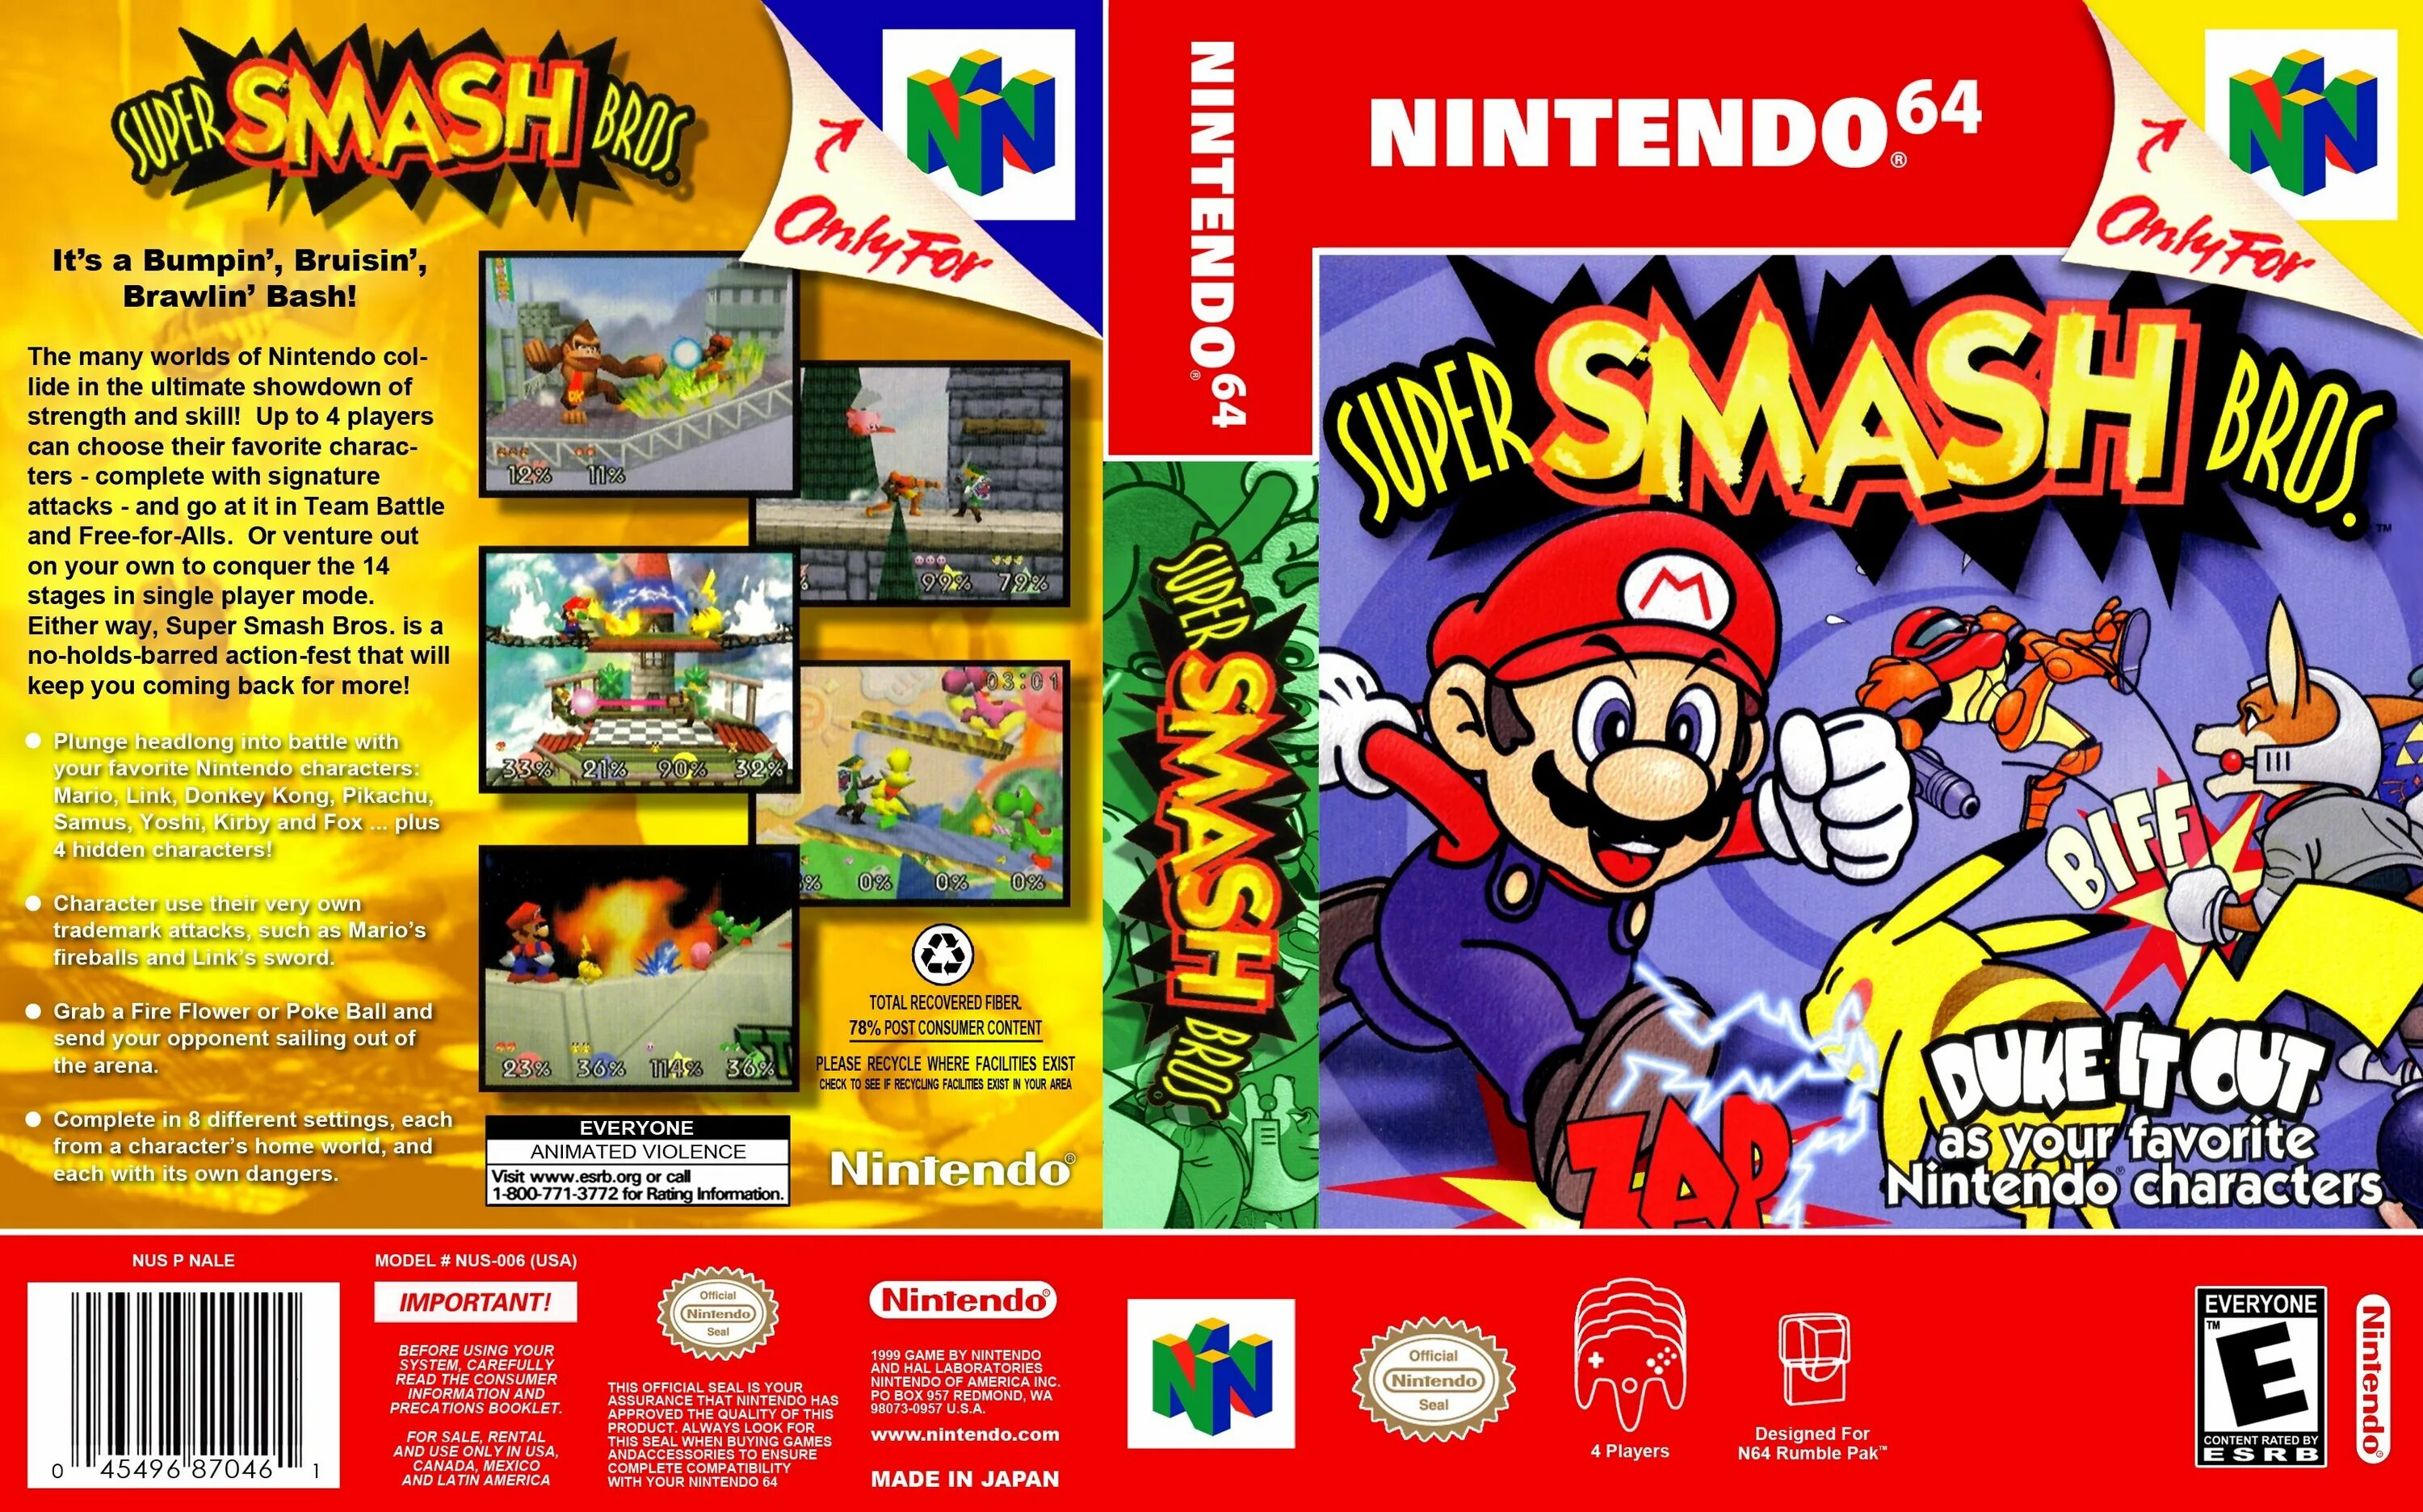 Nintendo 64 смэш БРОС. Супер Смаш БРОС Нинтендо 64. Super Smash Bros на Нинтендо 64. Super Smash Bros Nintendo 64. Nintendo 64 перевод